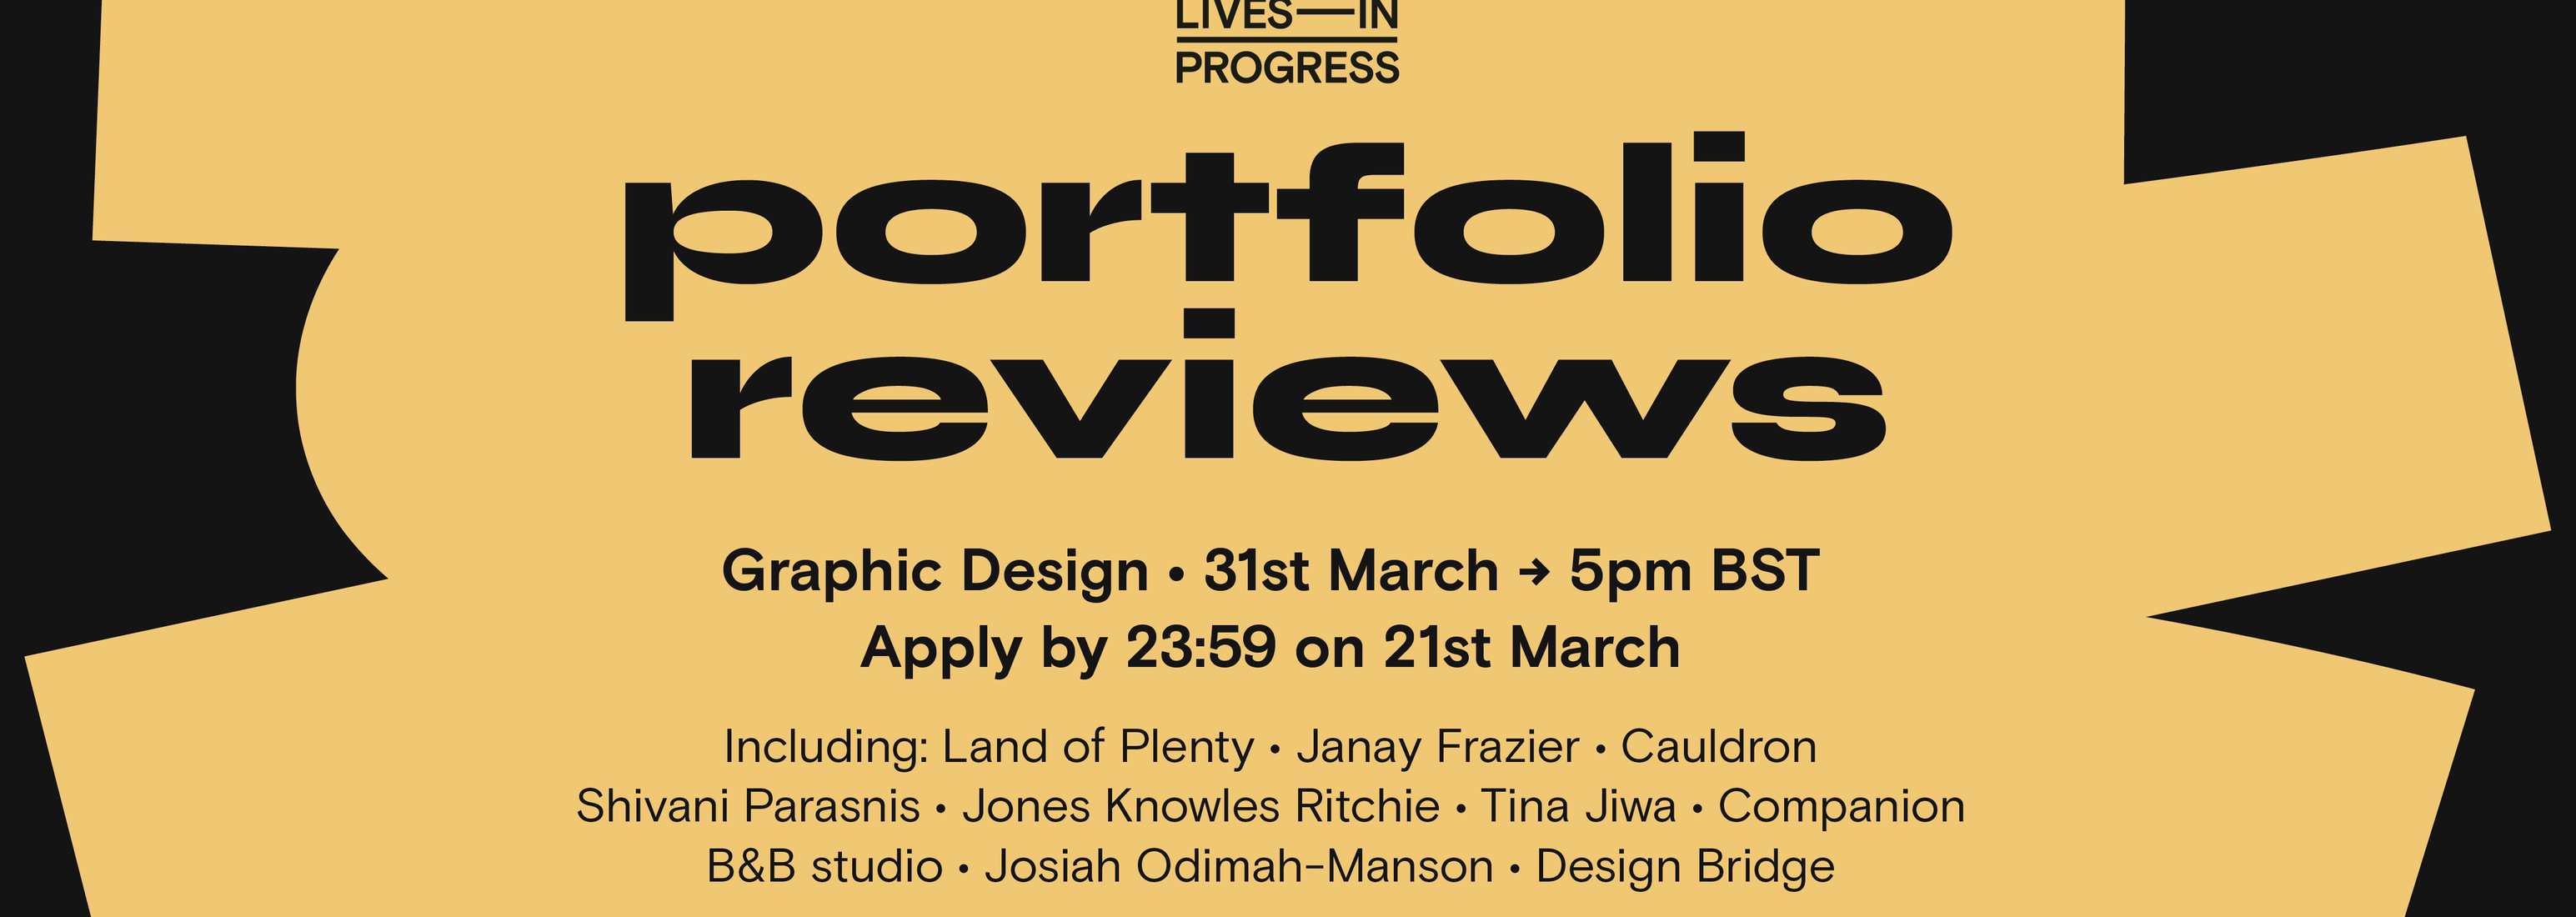 Creative Lives in Progress Portfolio Review - Graphic Design Event Tickets  | The Dots